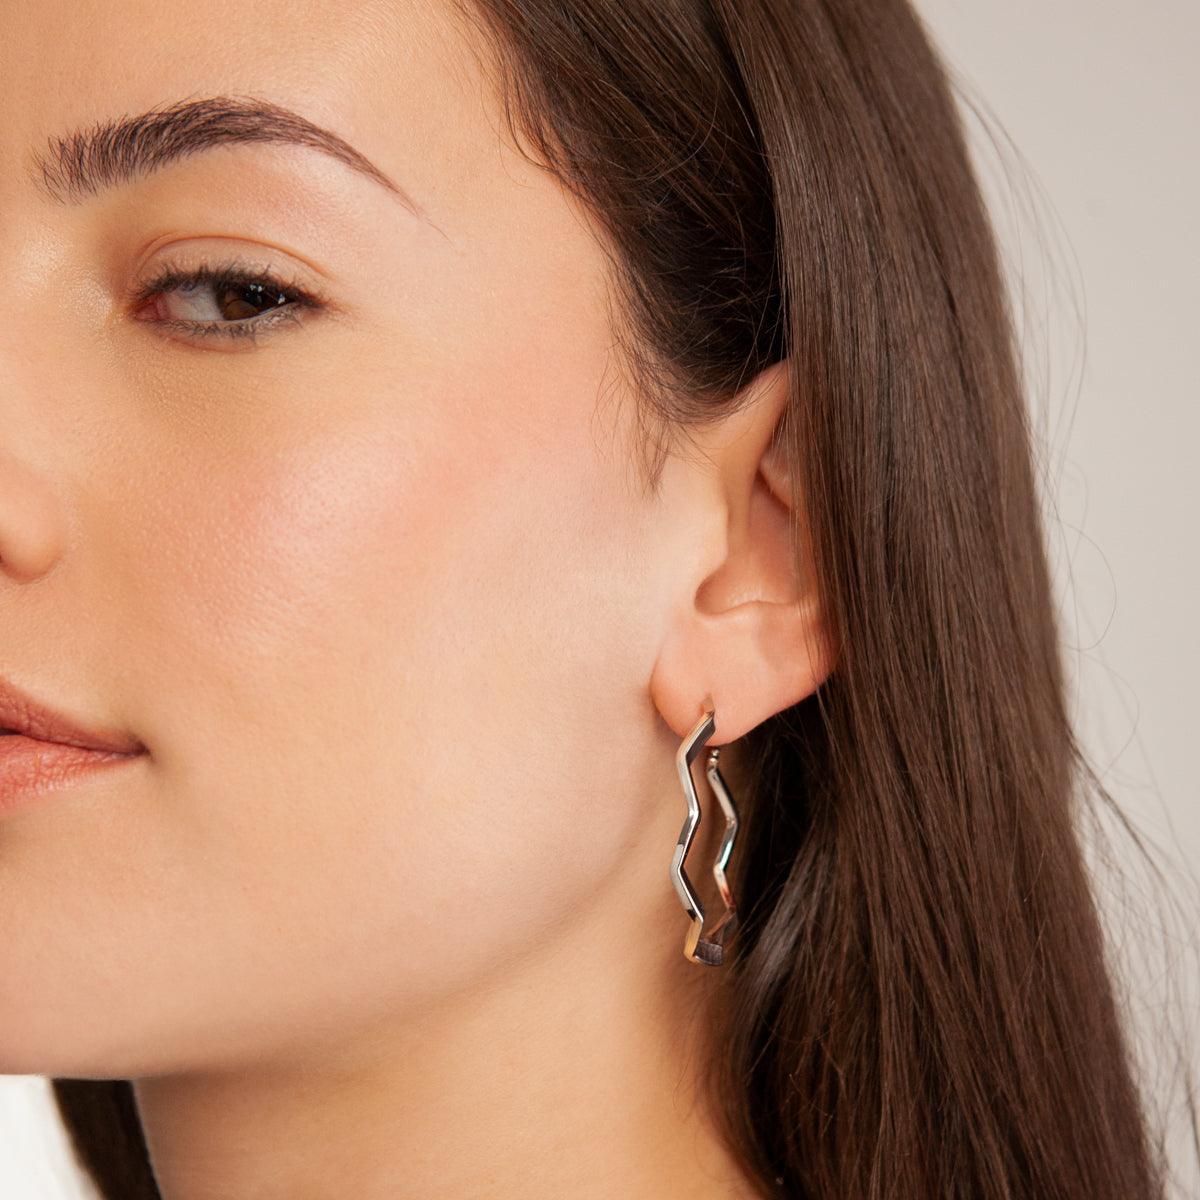 Model wearing Eternal Abstract Hoop Earrings in Silver